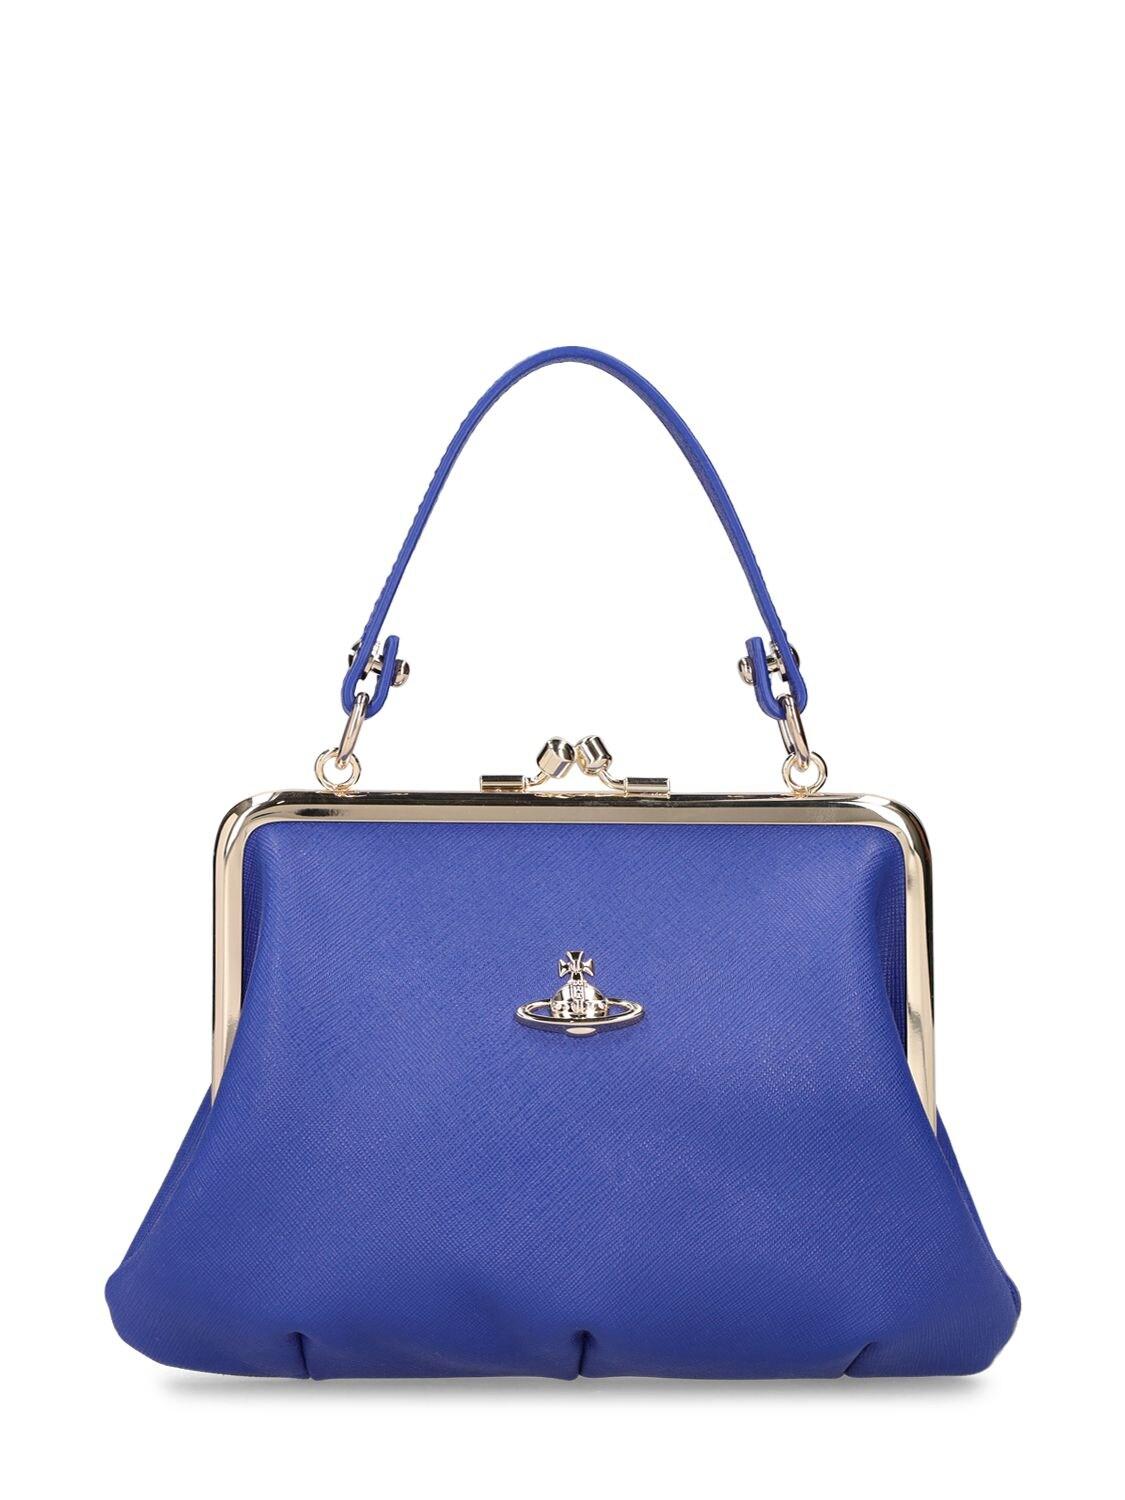 Vivienne Westwood Granny Frame Saffiano Leather Bag in Blue | Lyst UK